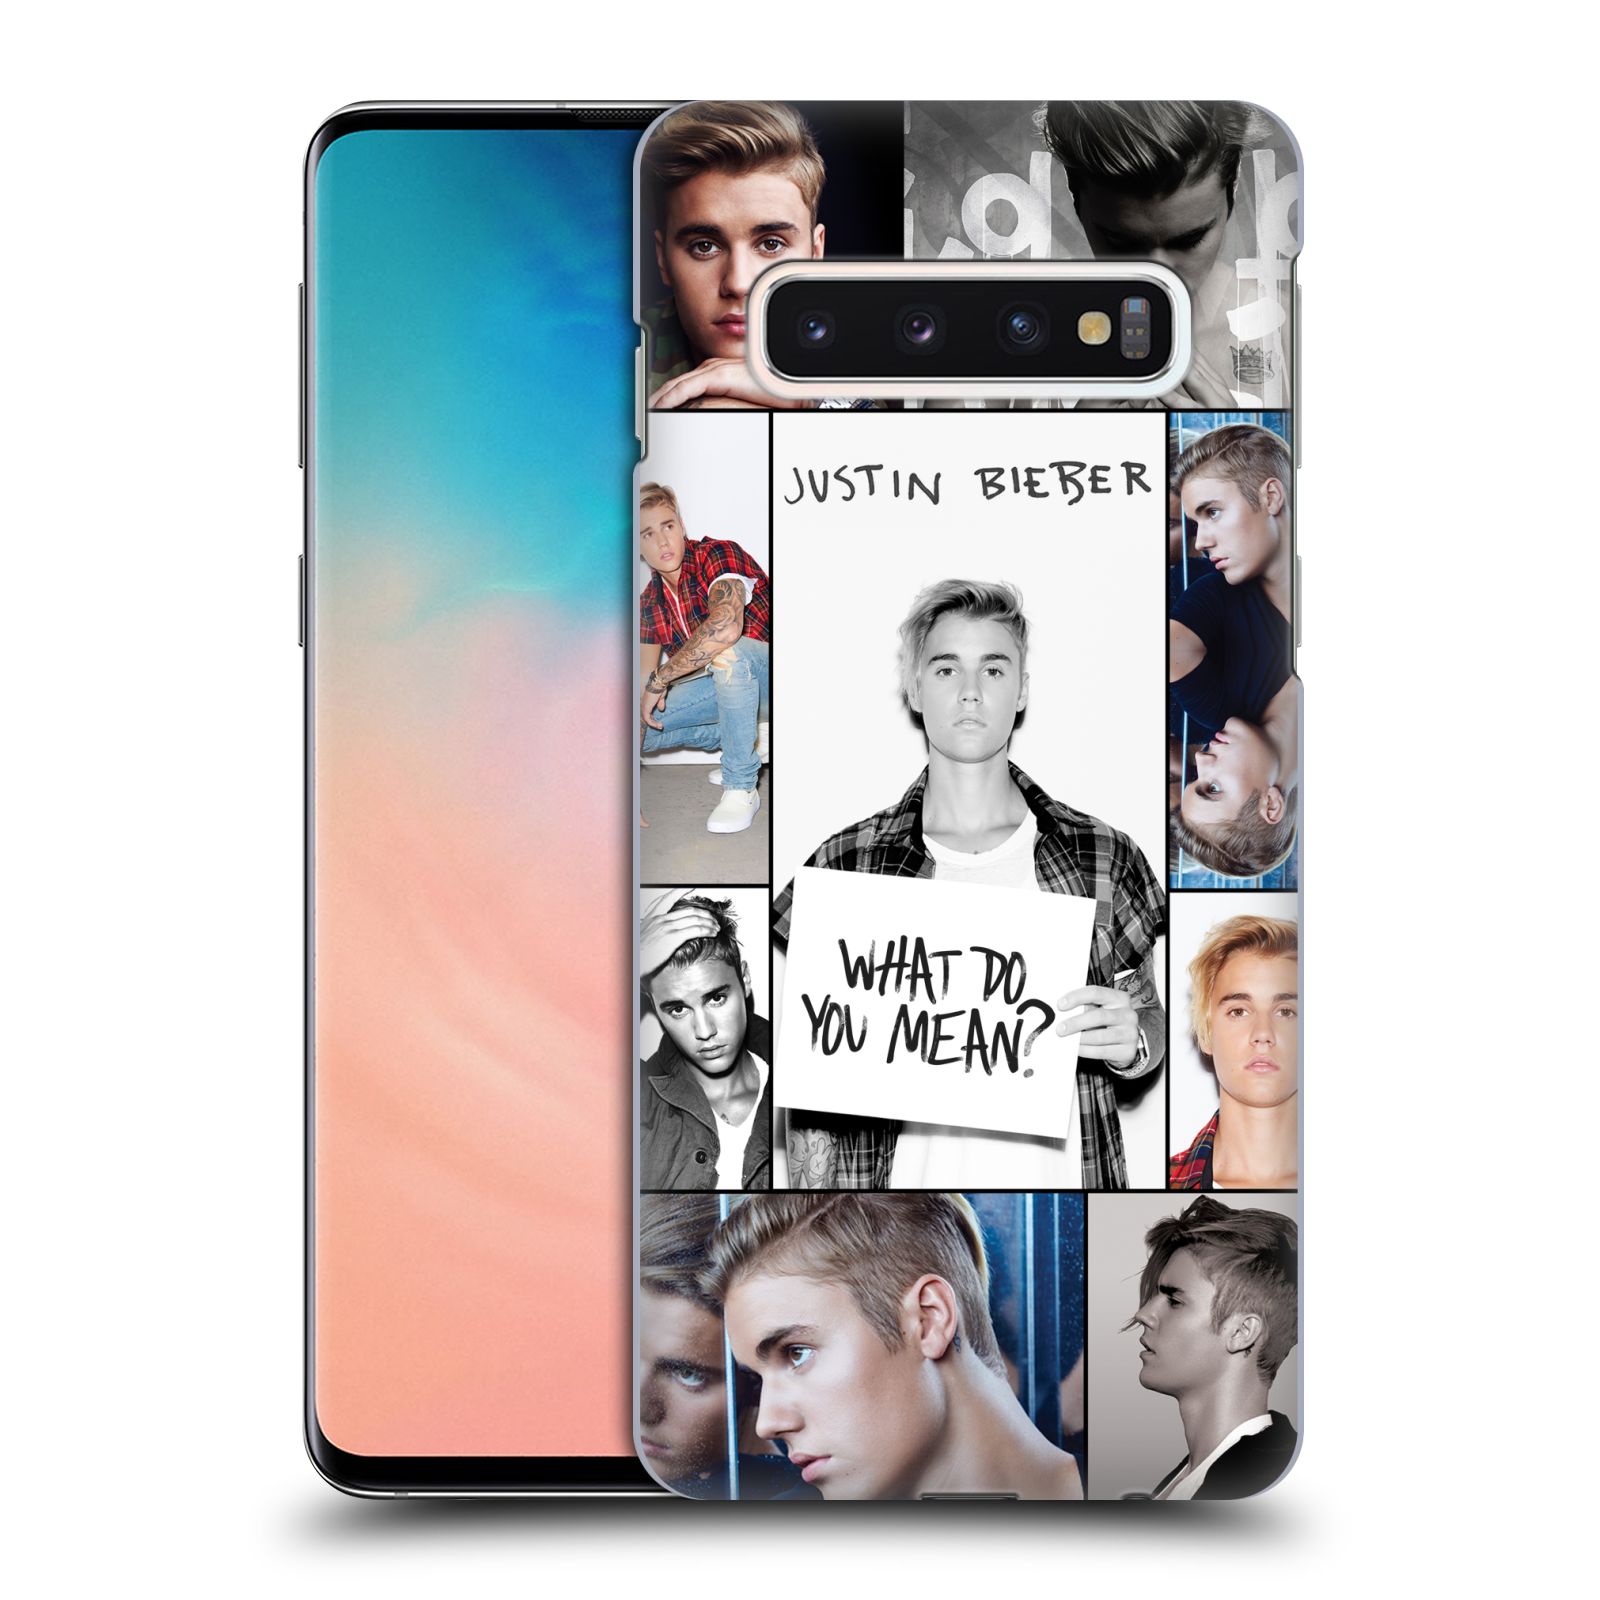 Pouzdro na mobil Samsung Galaxy S10 - HEAD CASE - Justin Bieber foto Purpose malé fotky